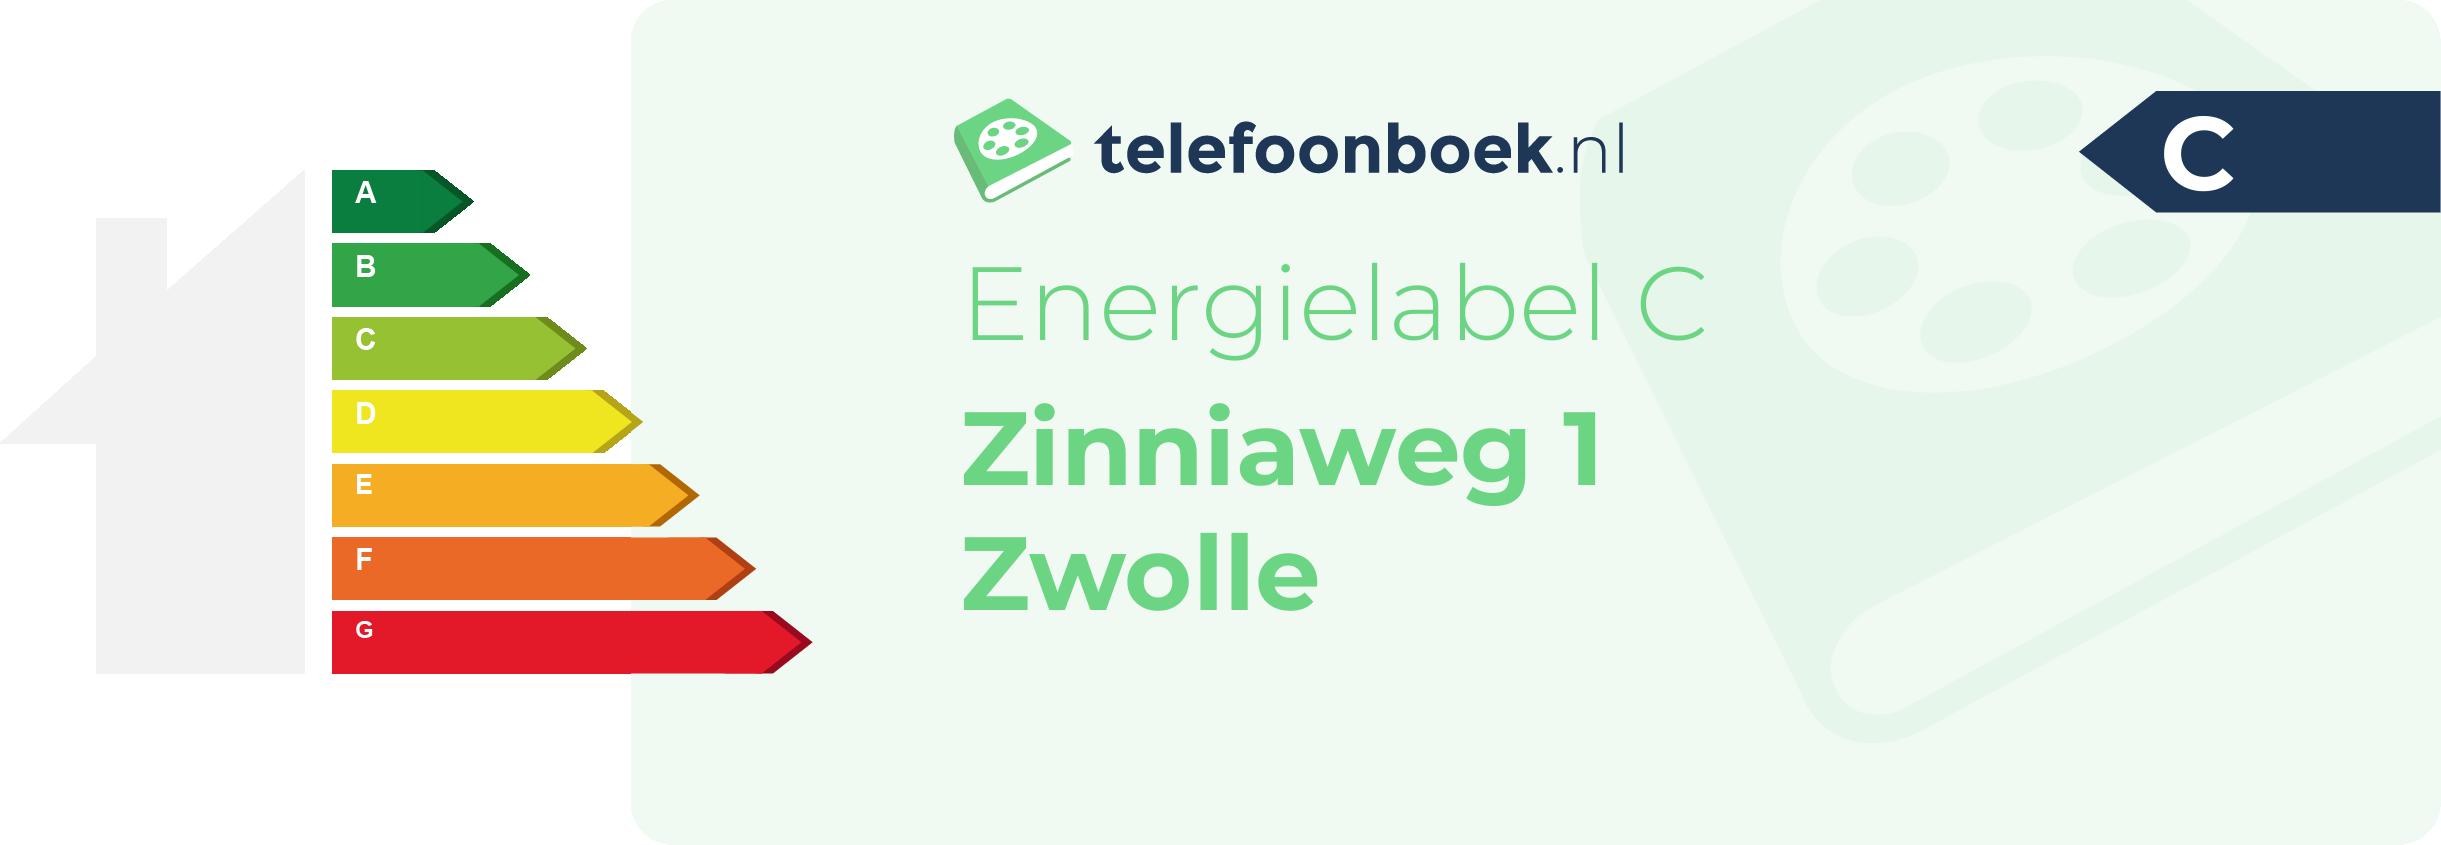 Energielabel Zinniaweg 1 Zwolle